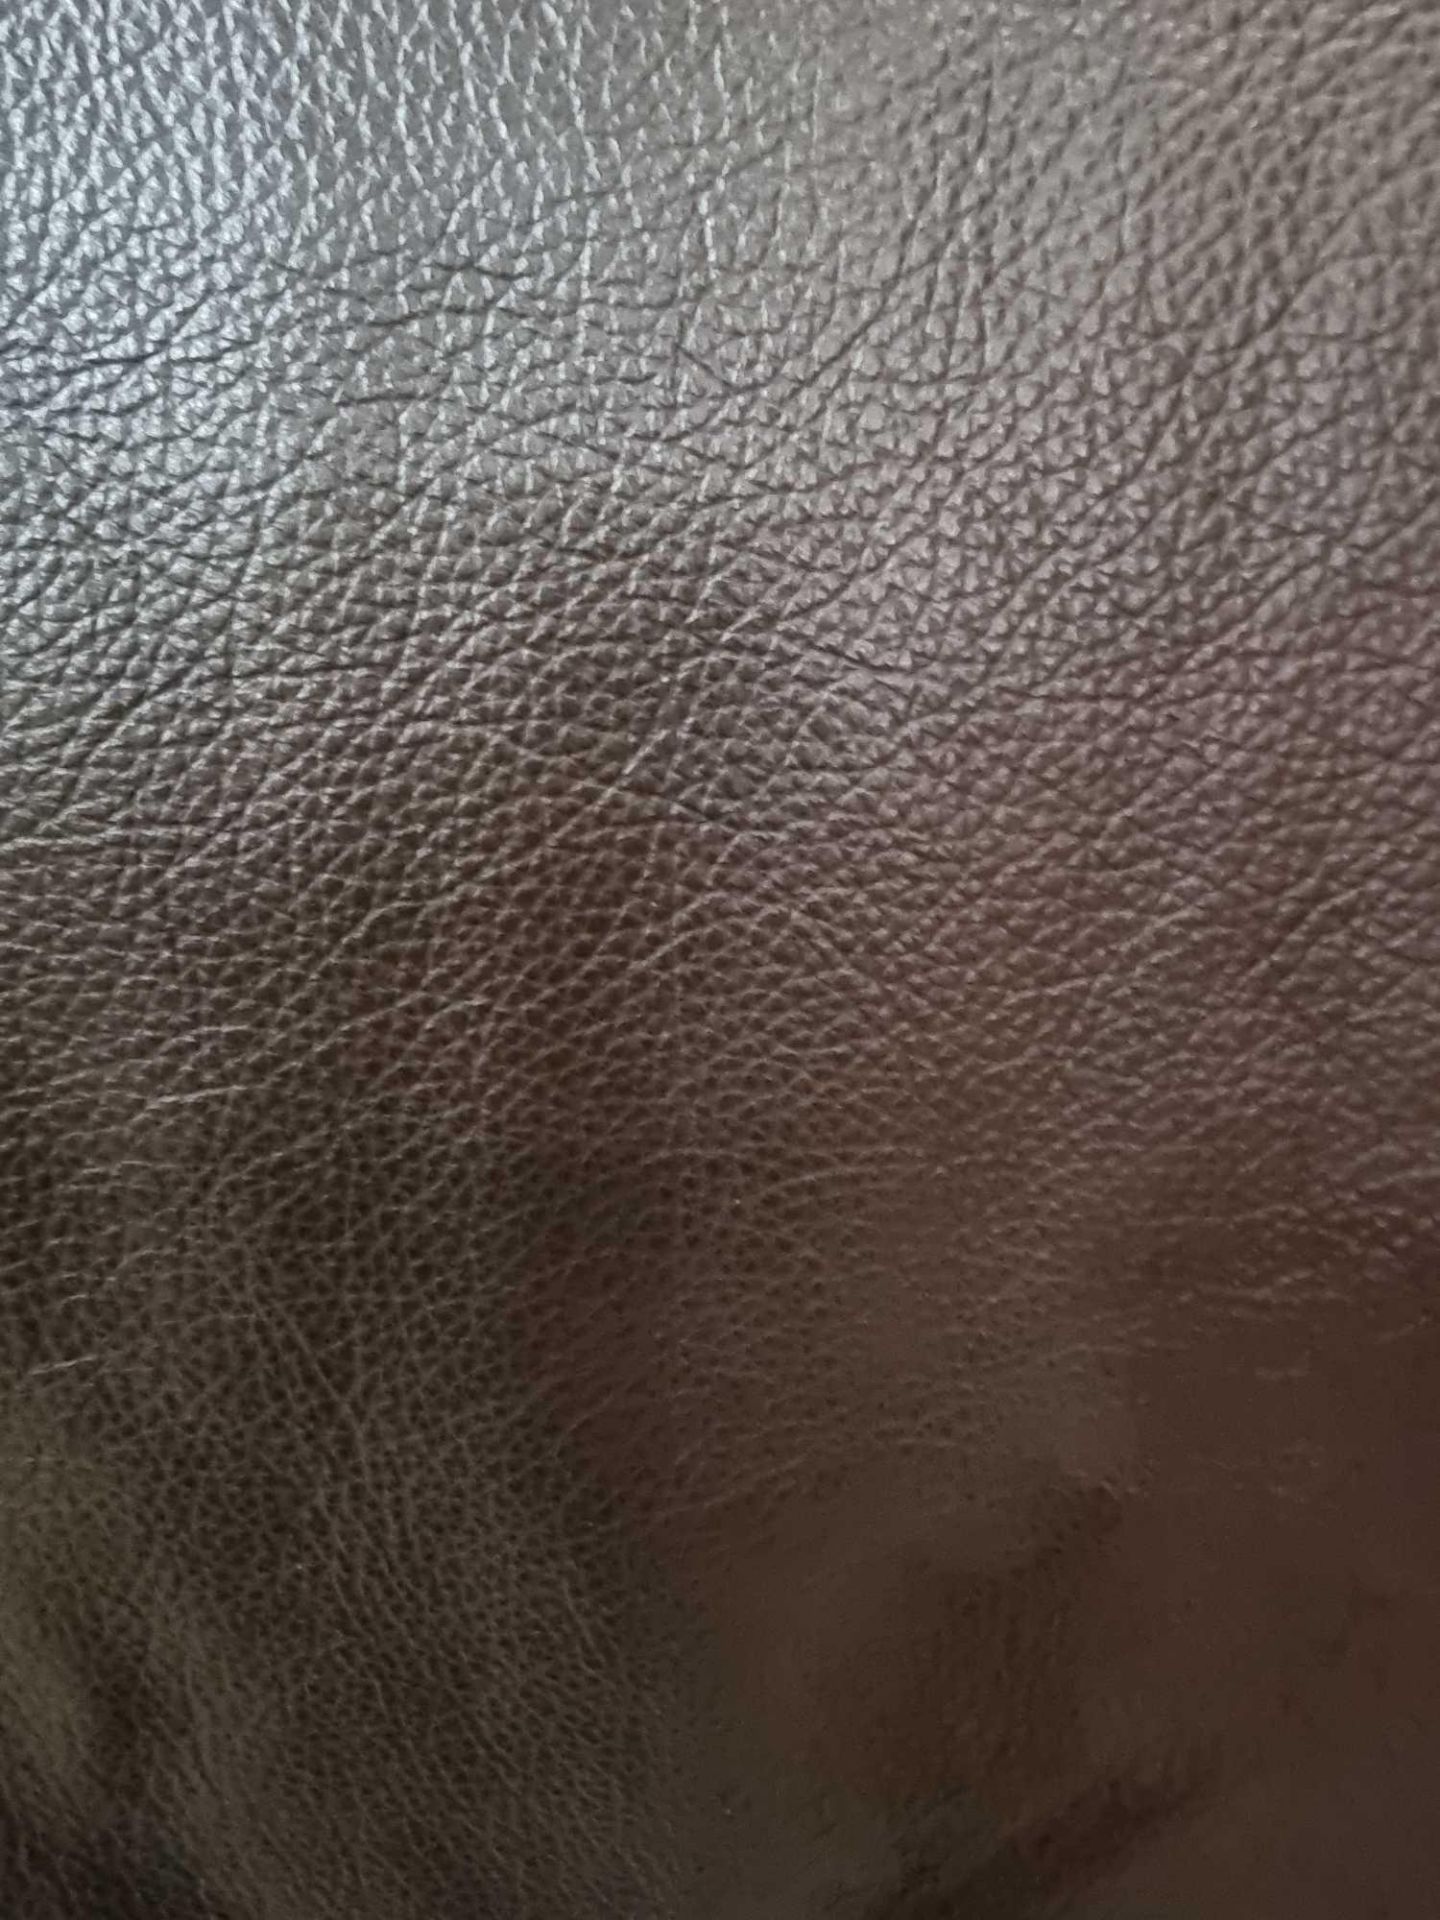 Mastrotto Dakota Chocolate Leather Hide approximately 3 8M2 2 x 1 9cm ( Hide No,106) - Image 2 of 3